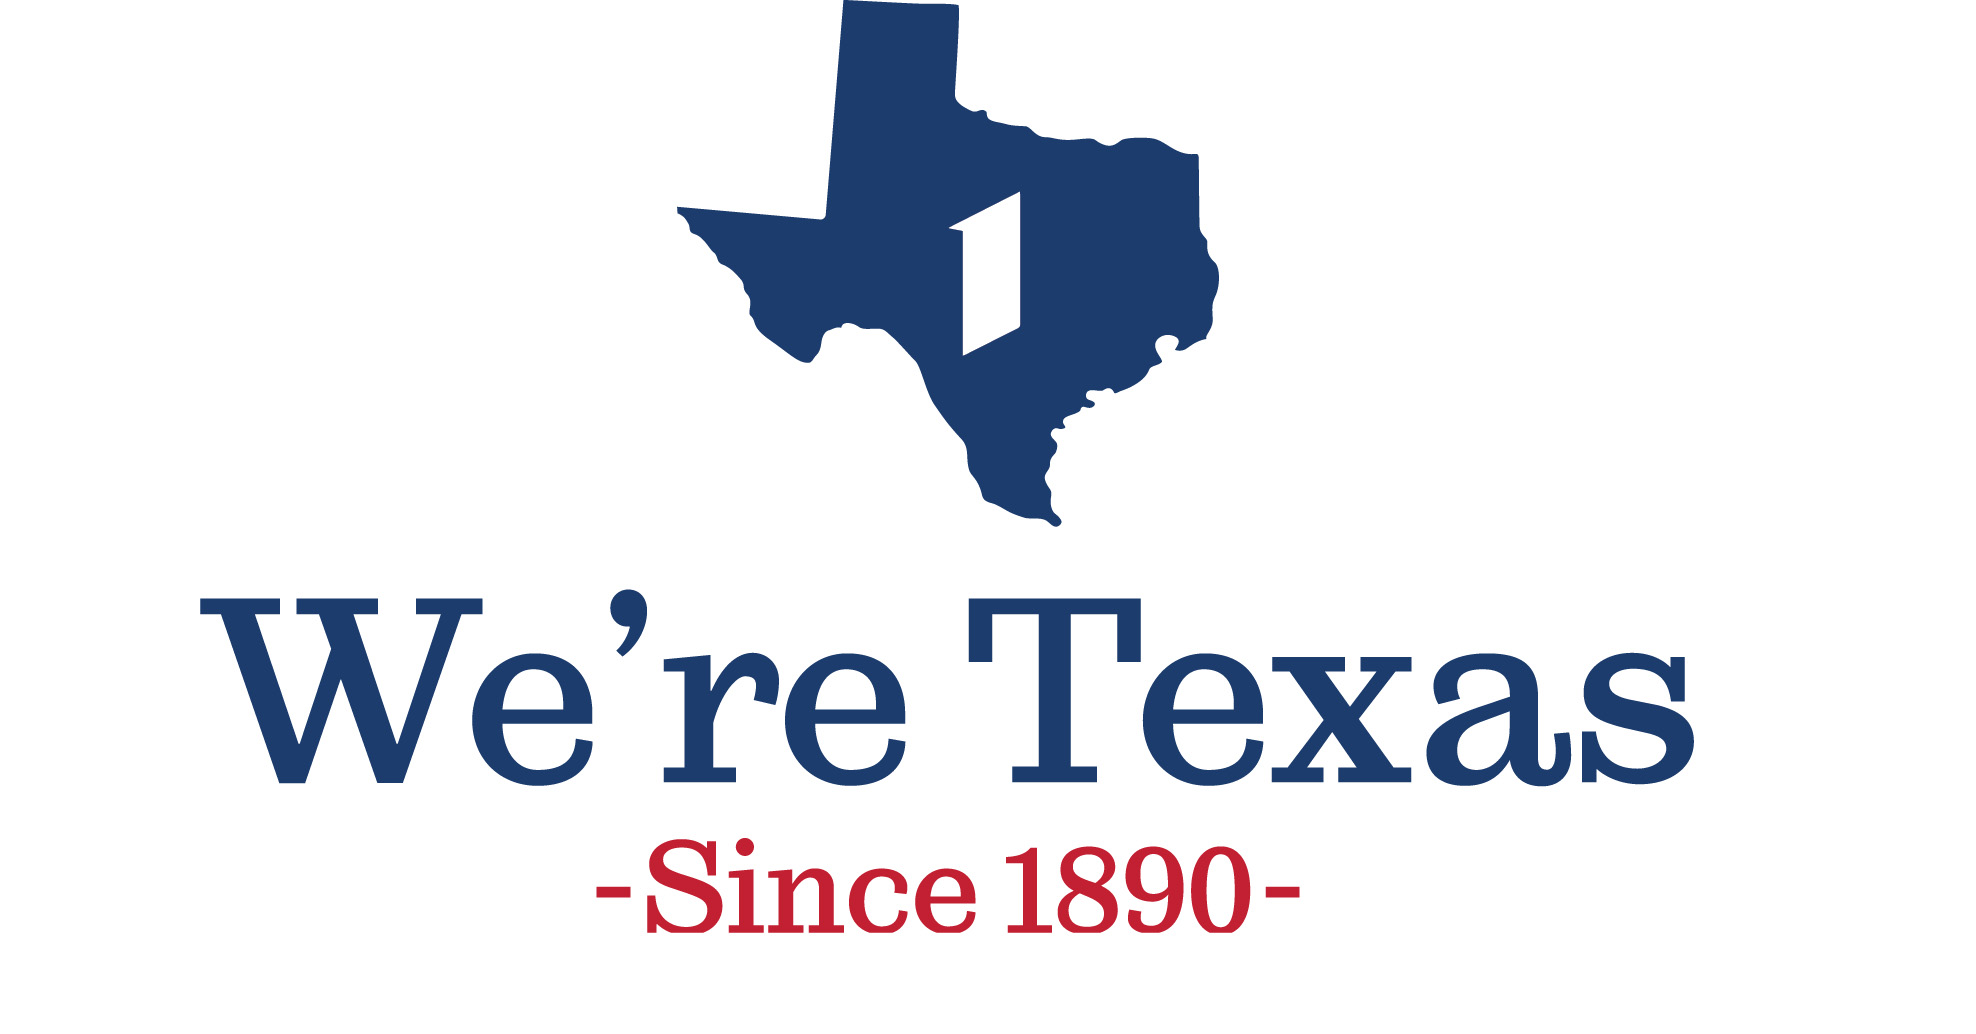 Image - We're Texas